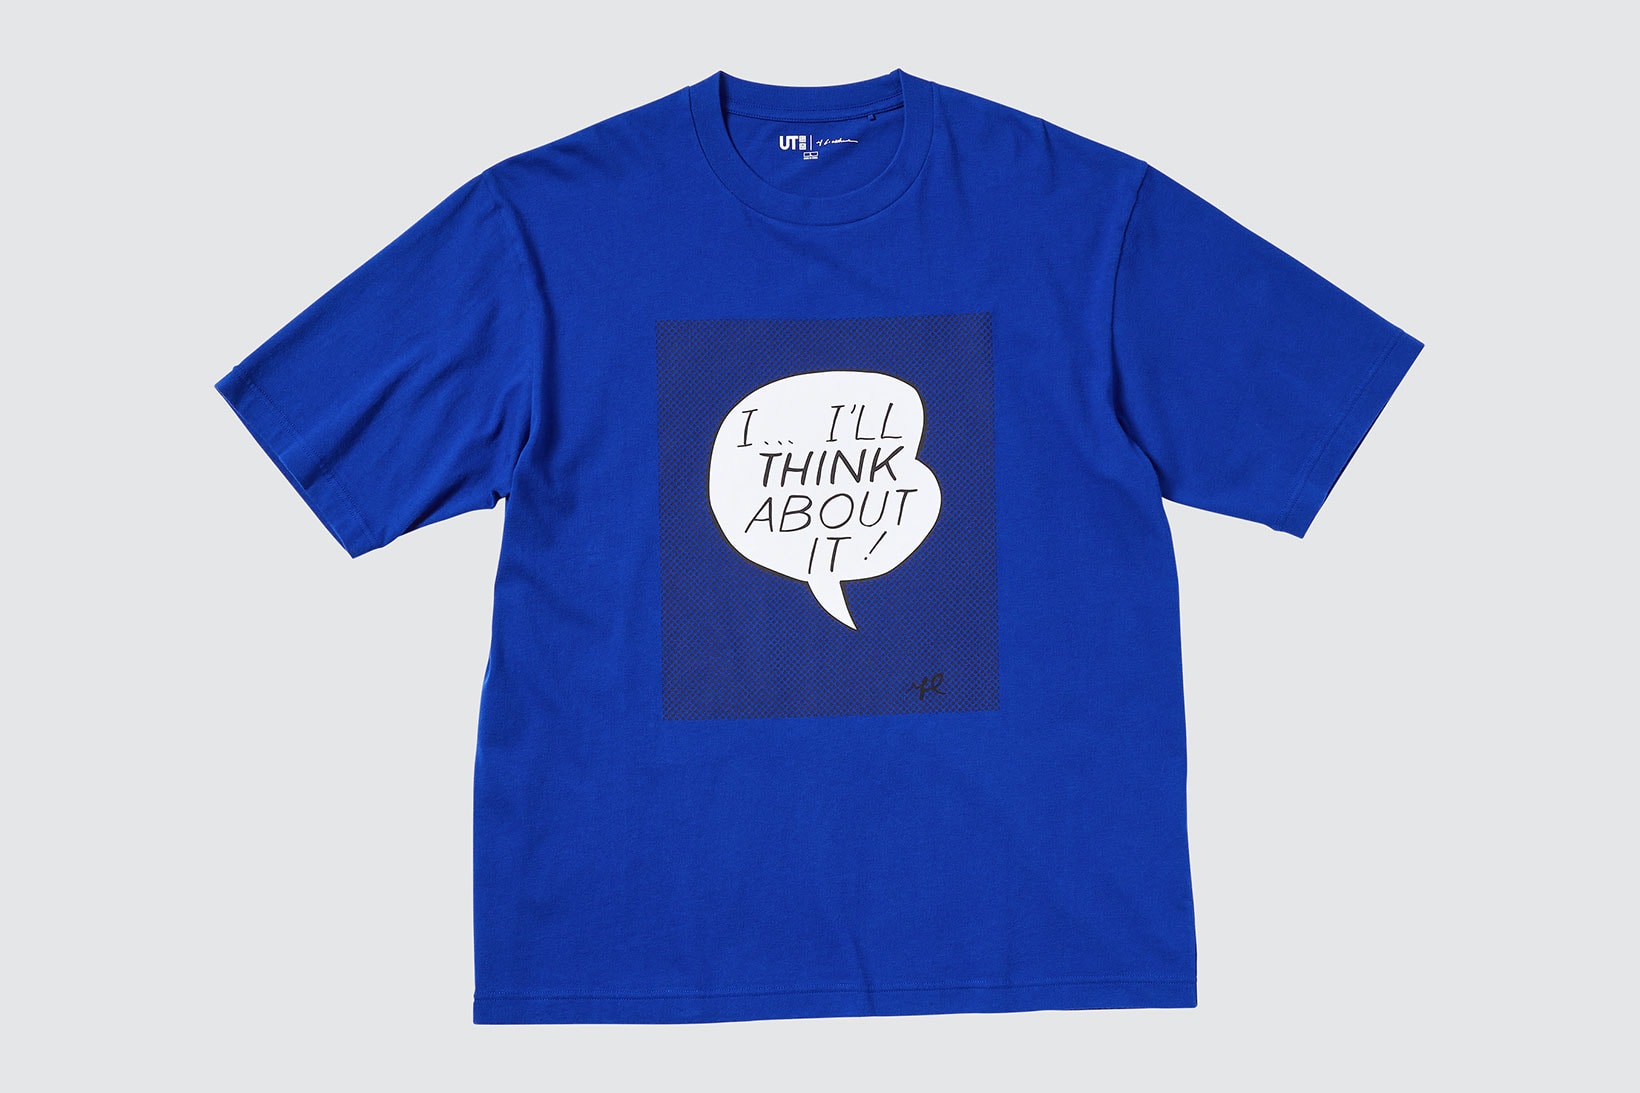 uniqlo ut roy lichtenstein american pop art collaboration t-shirts blue i'll think about it graphic